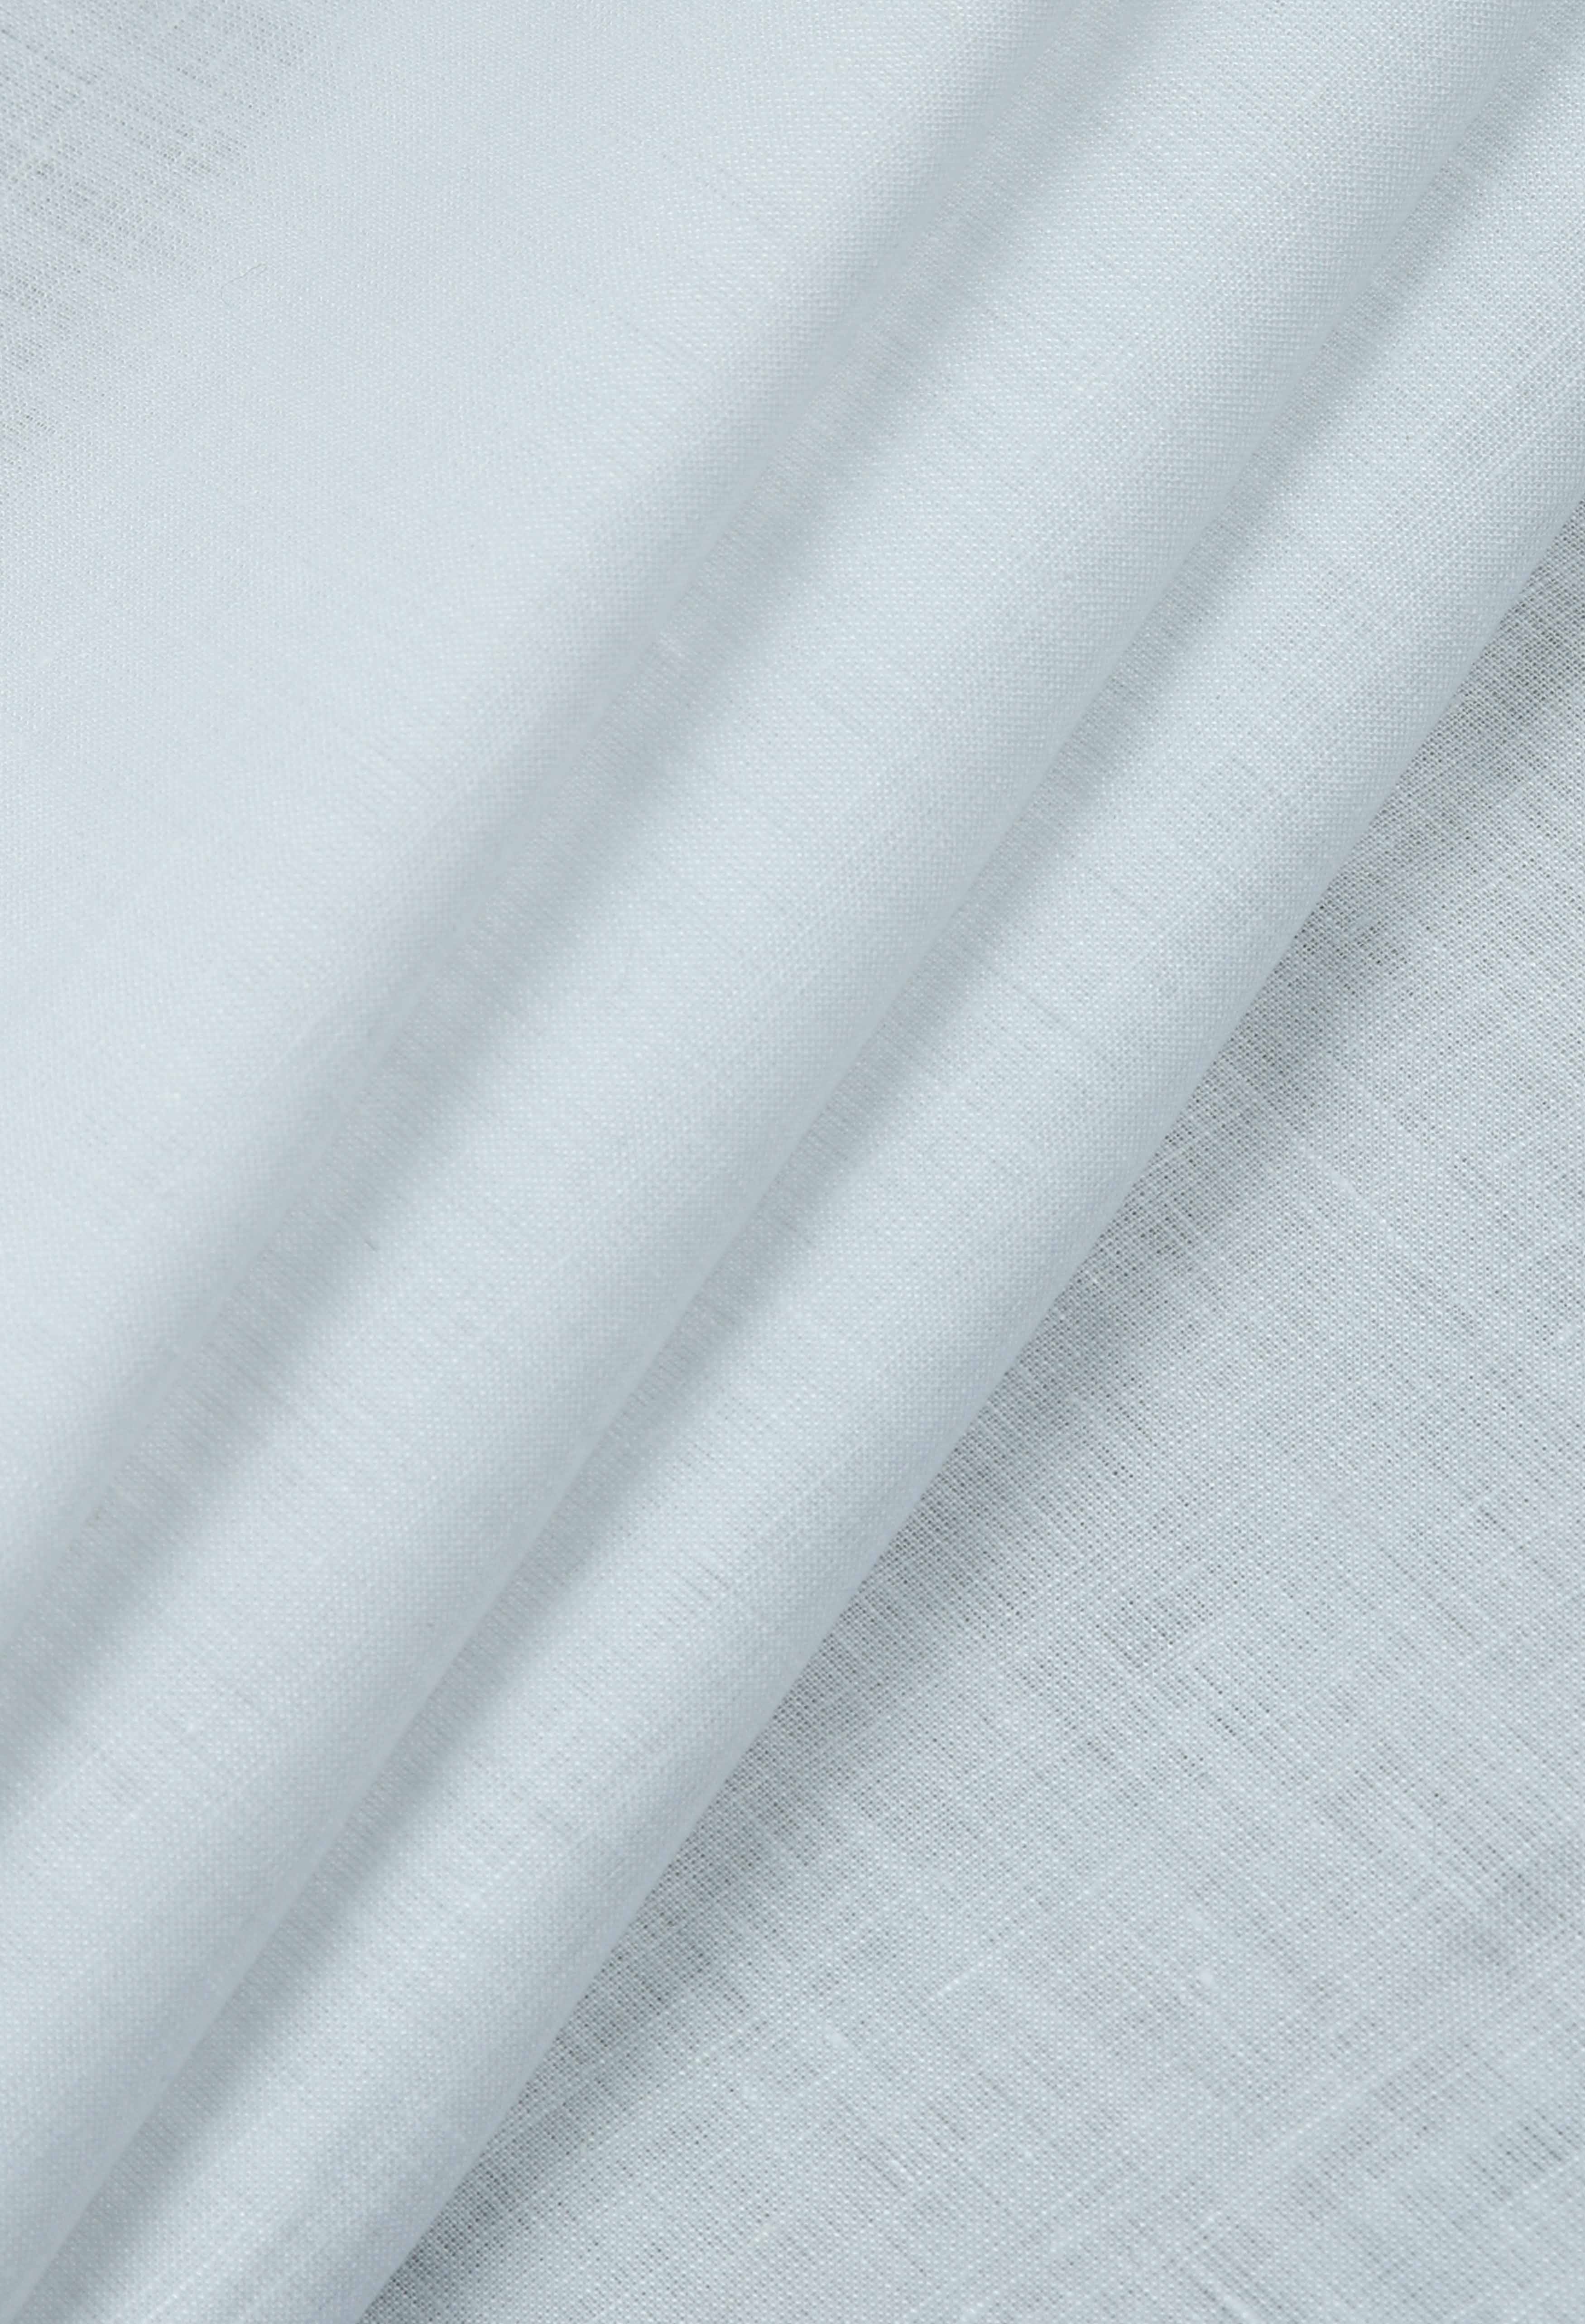 Pearl White Linen (TH-000676)